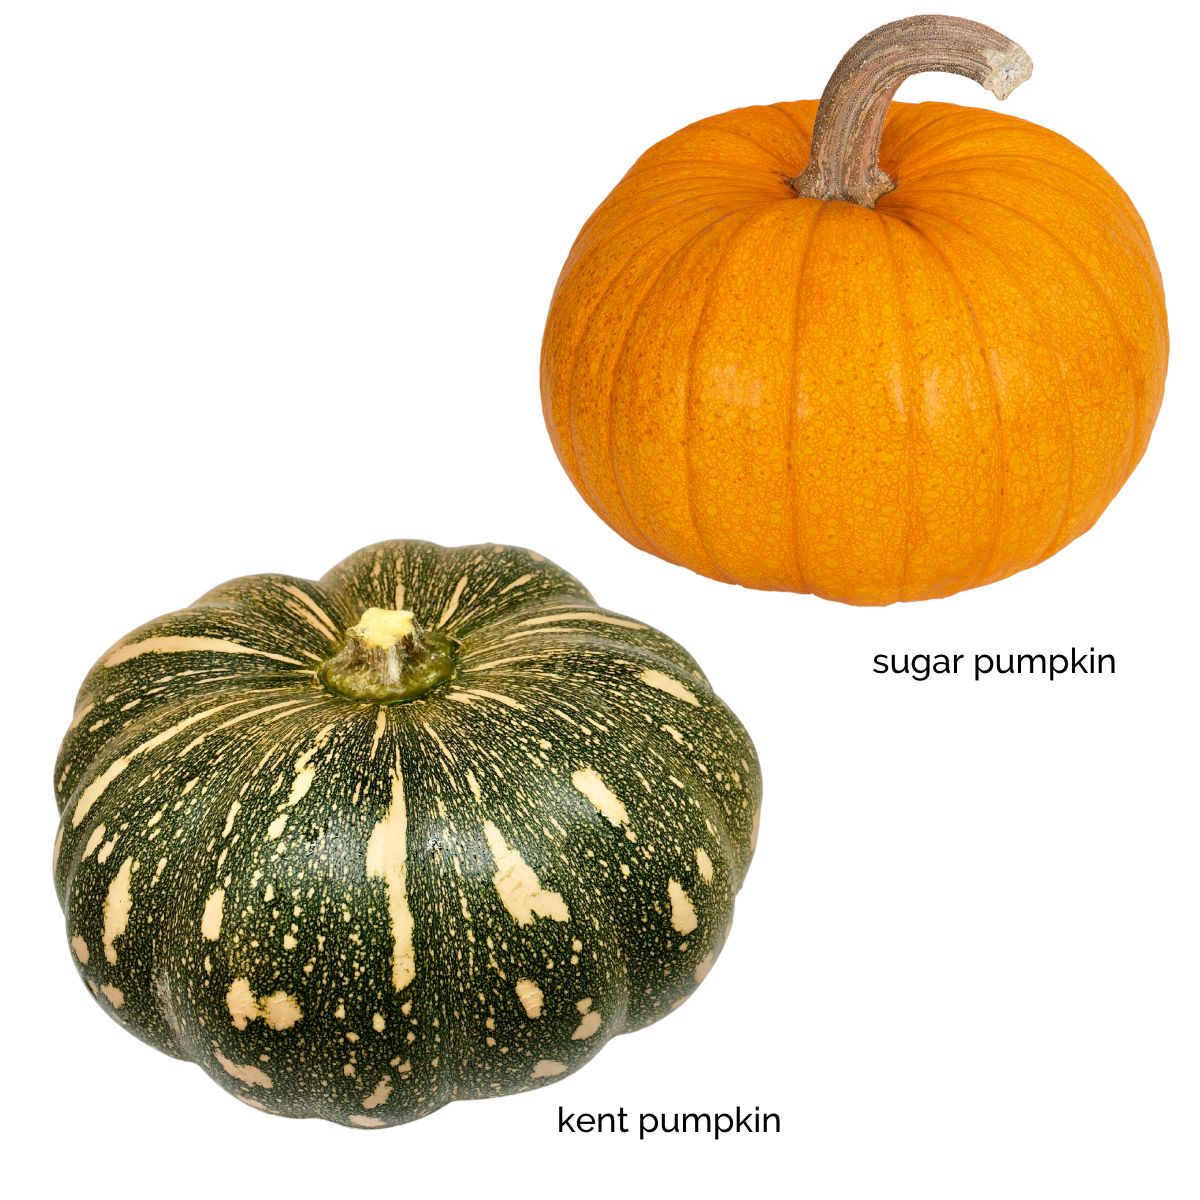 A Kent Pumpkin and Sugar Pumpkin.